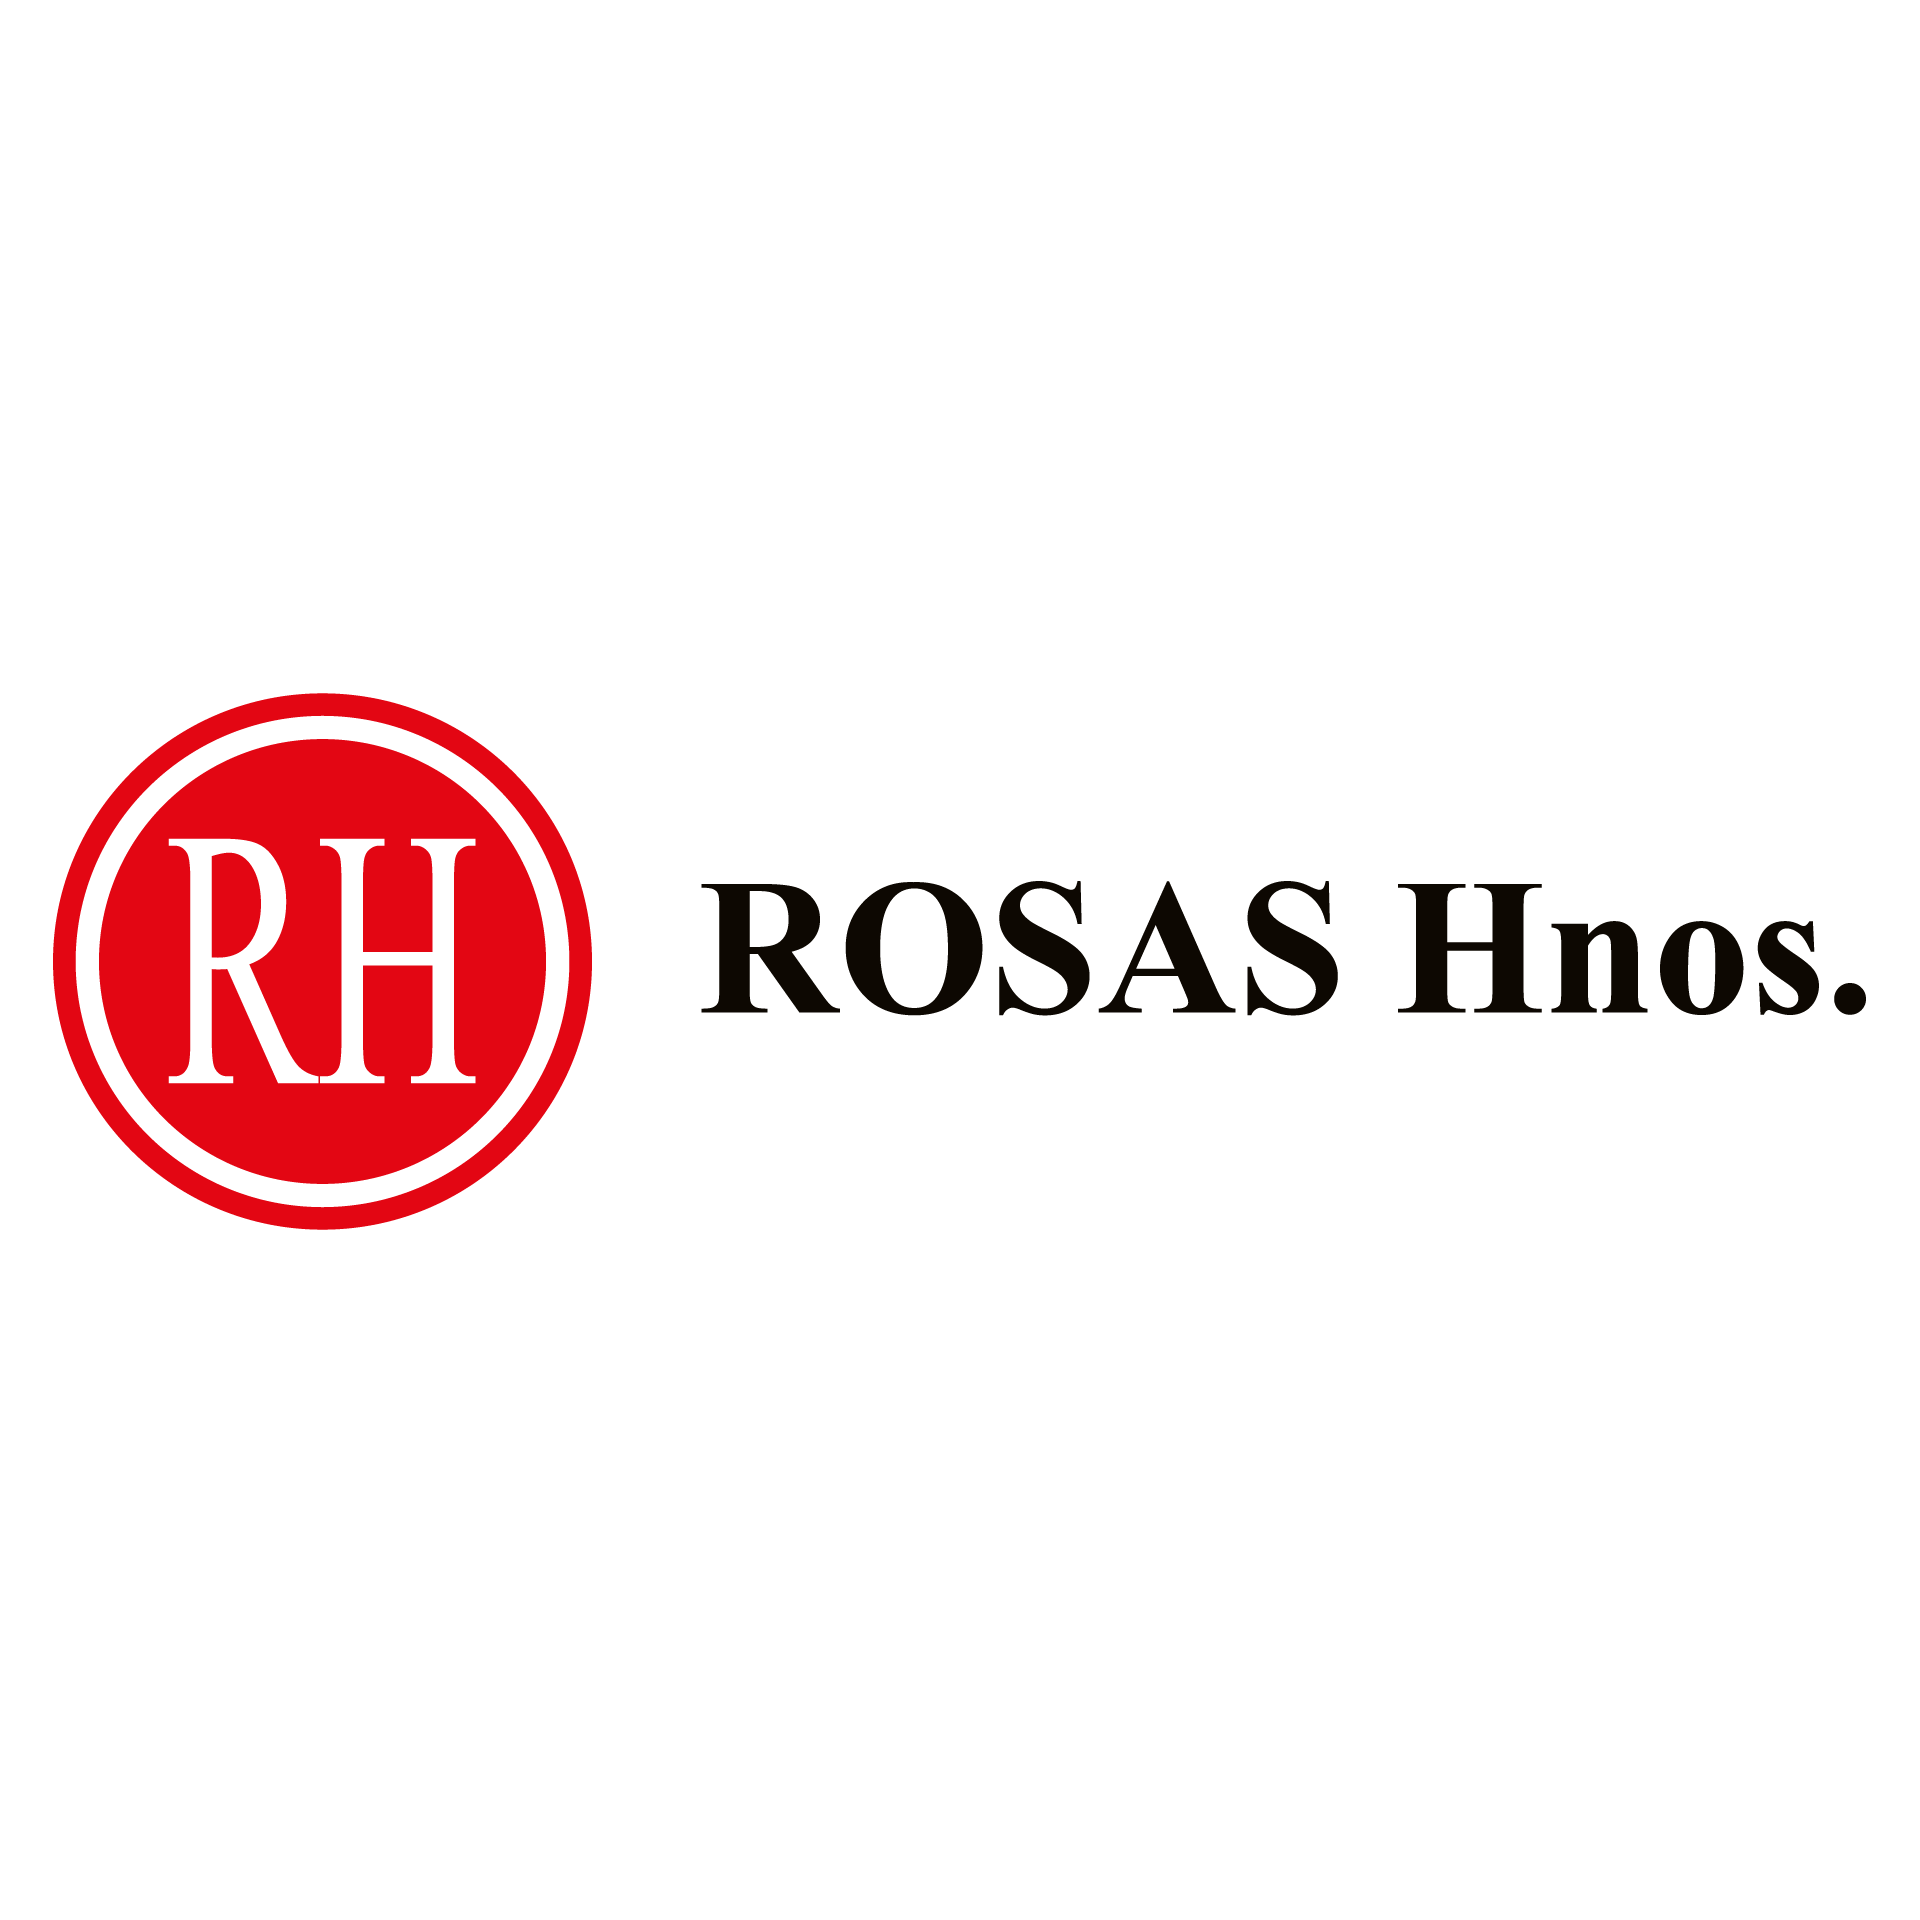 (c) Rosashermanos.com.uy